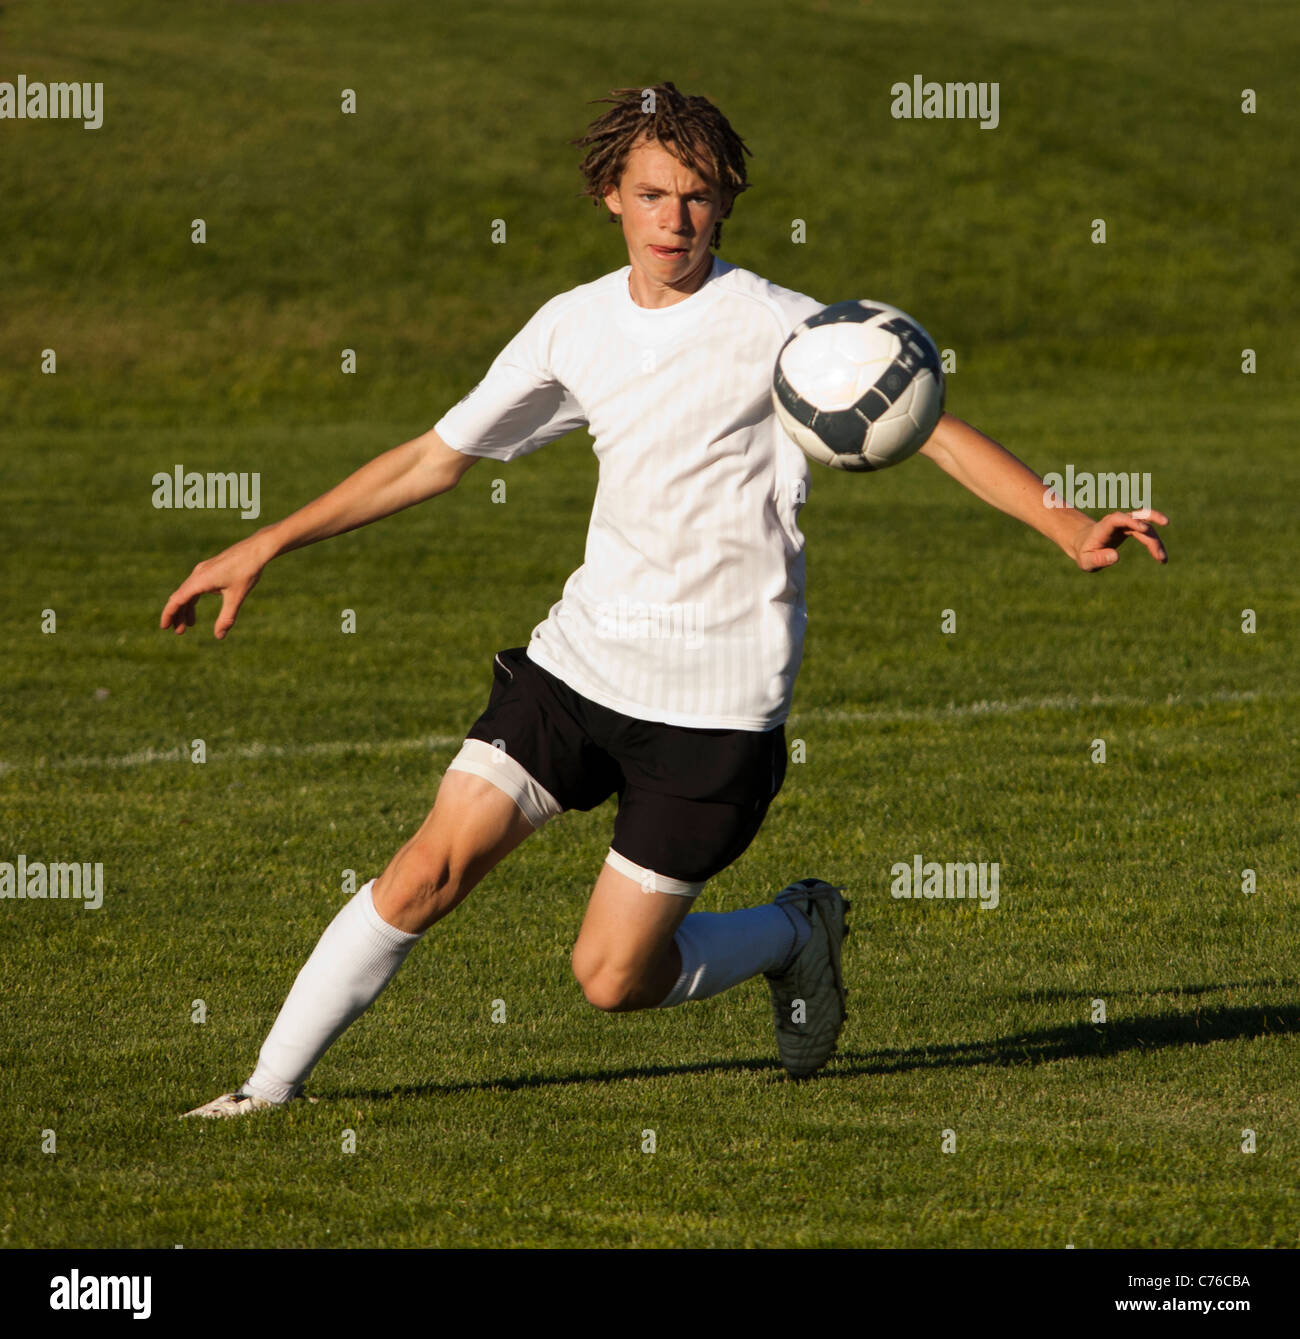 USA, Utah, Orem, teenage (14-15) boy playing soccer Banque D'Images